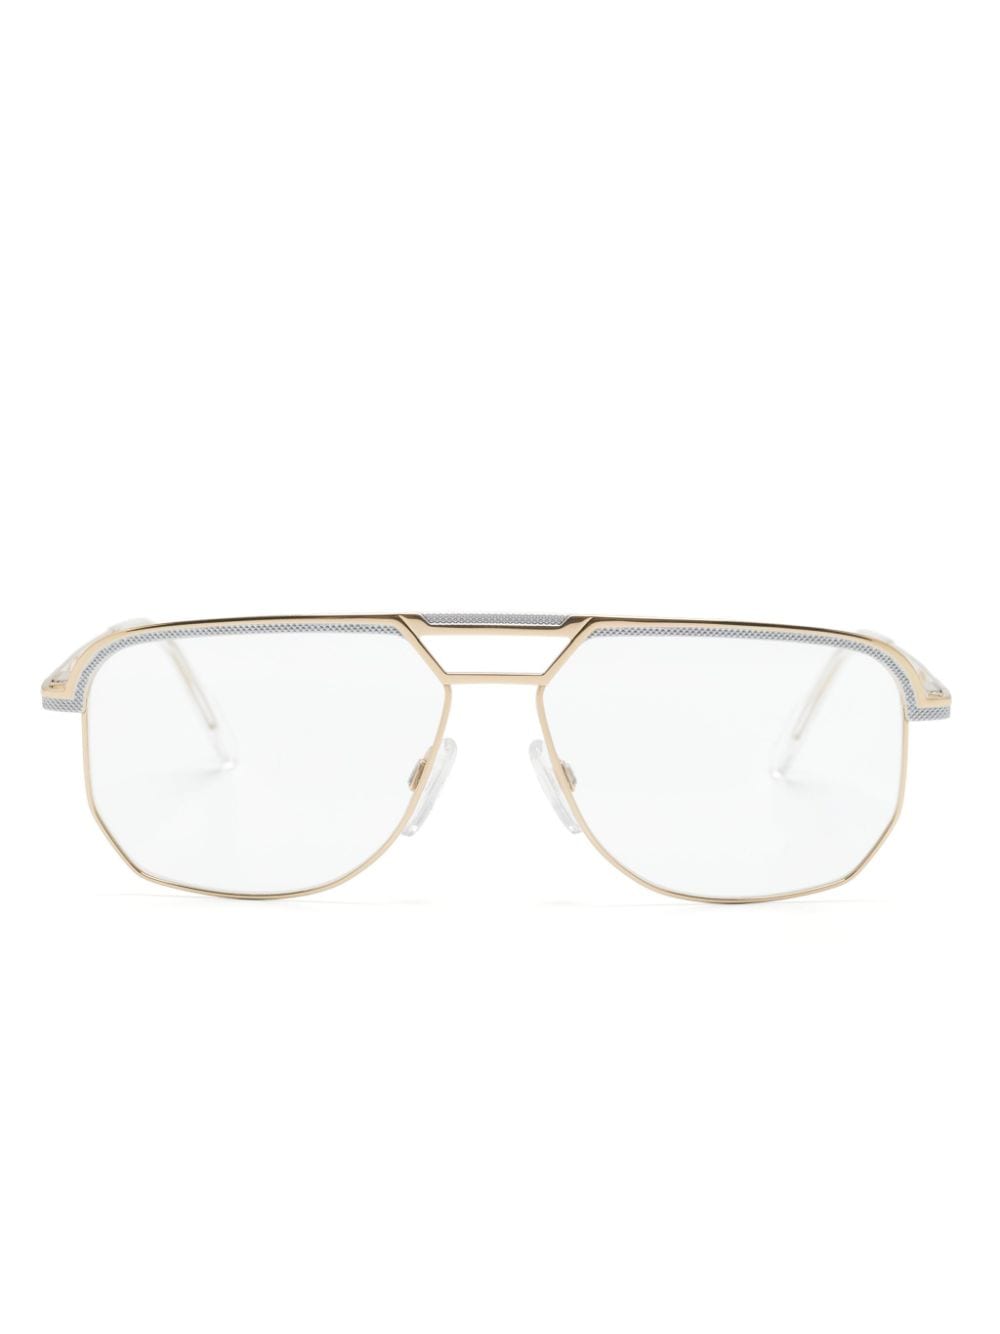 Cazal 7101 Pilot-frame Glasses In Gold